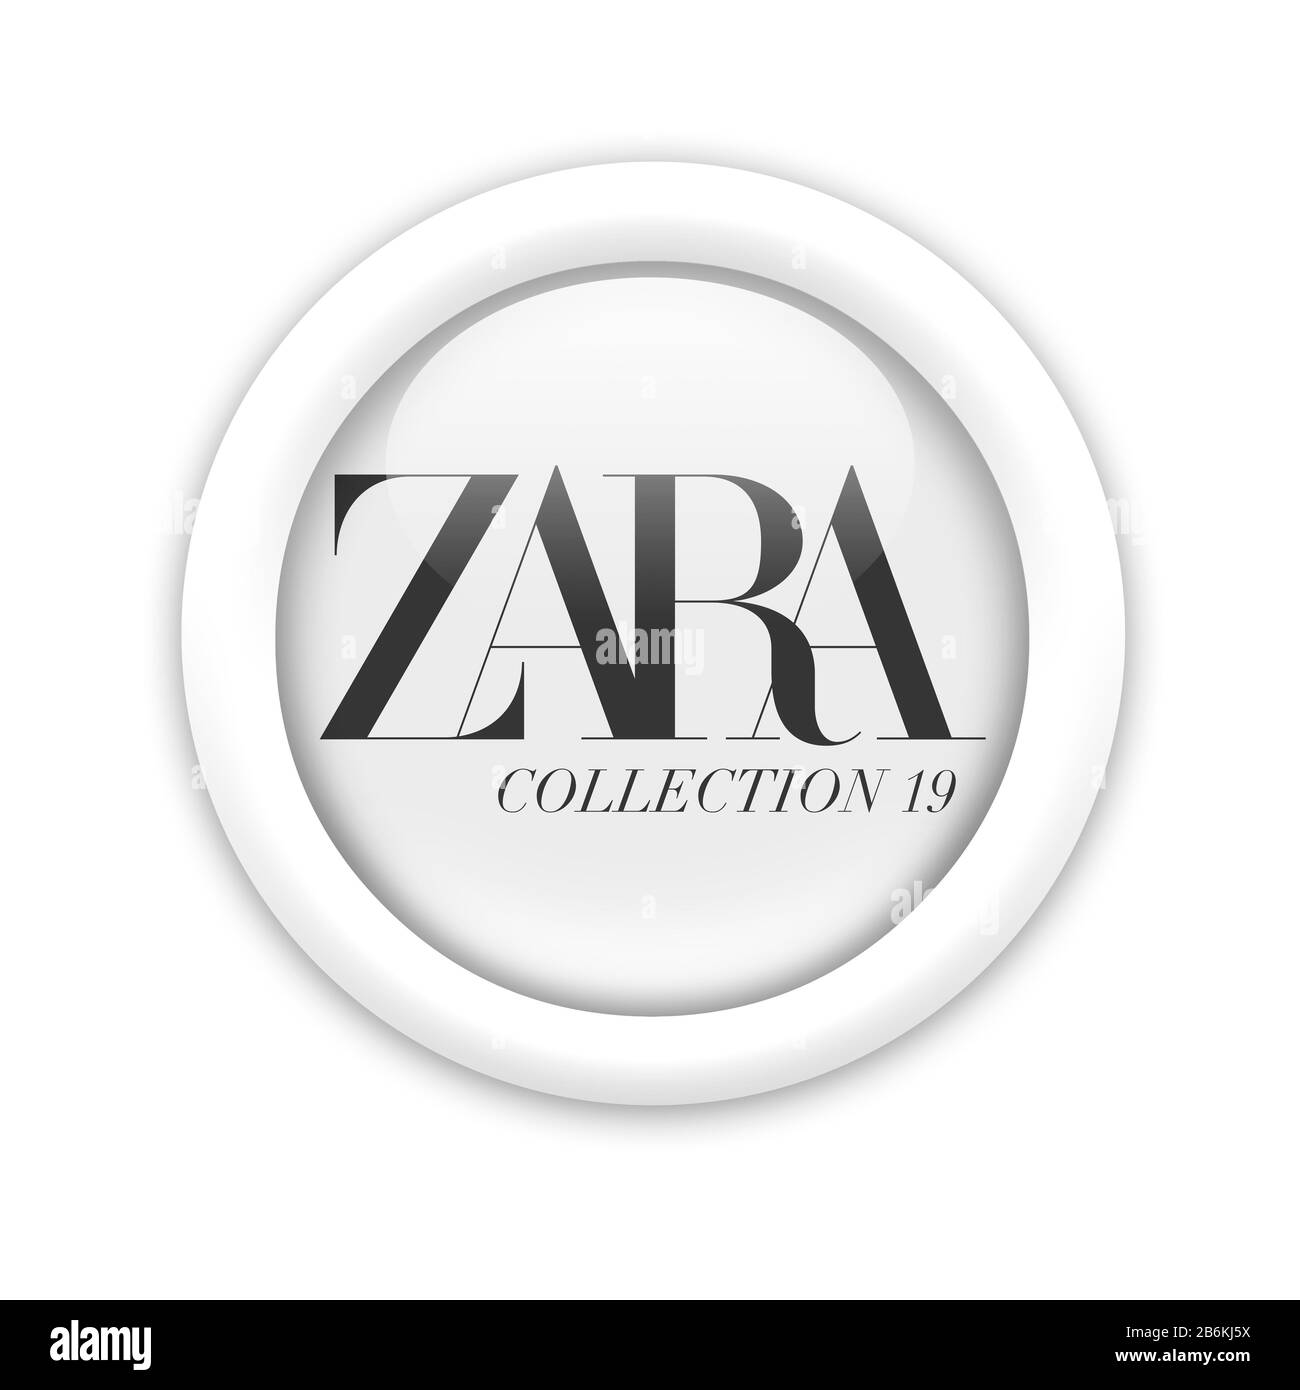 Zara logo Black and White Stock Photos & Images - Alamy